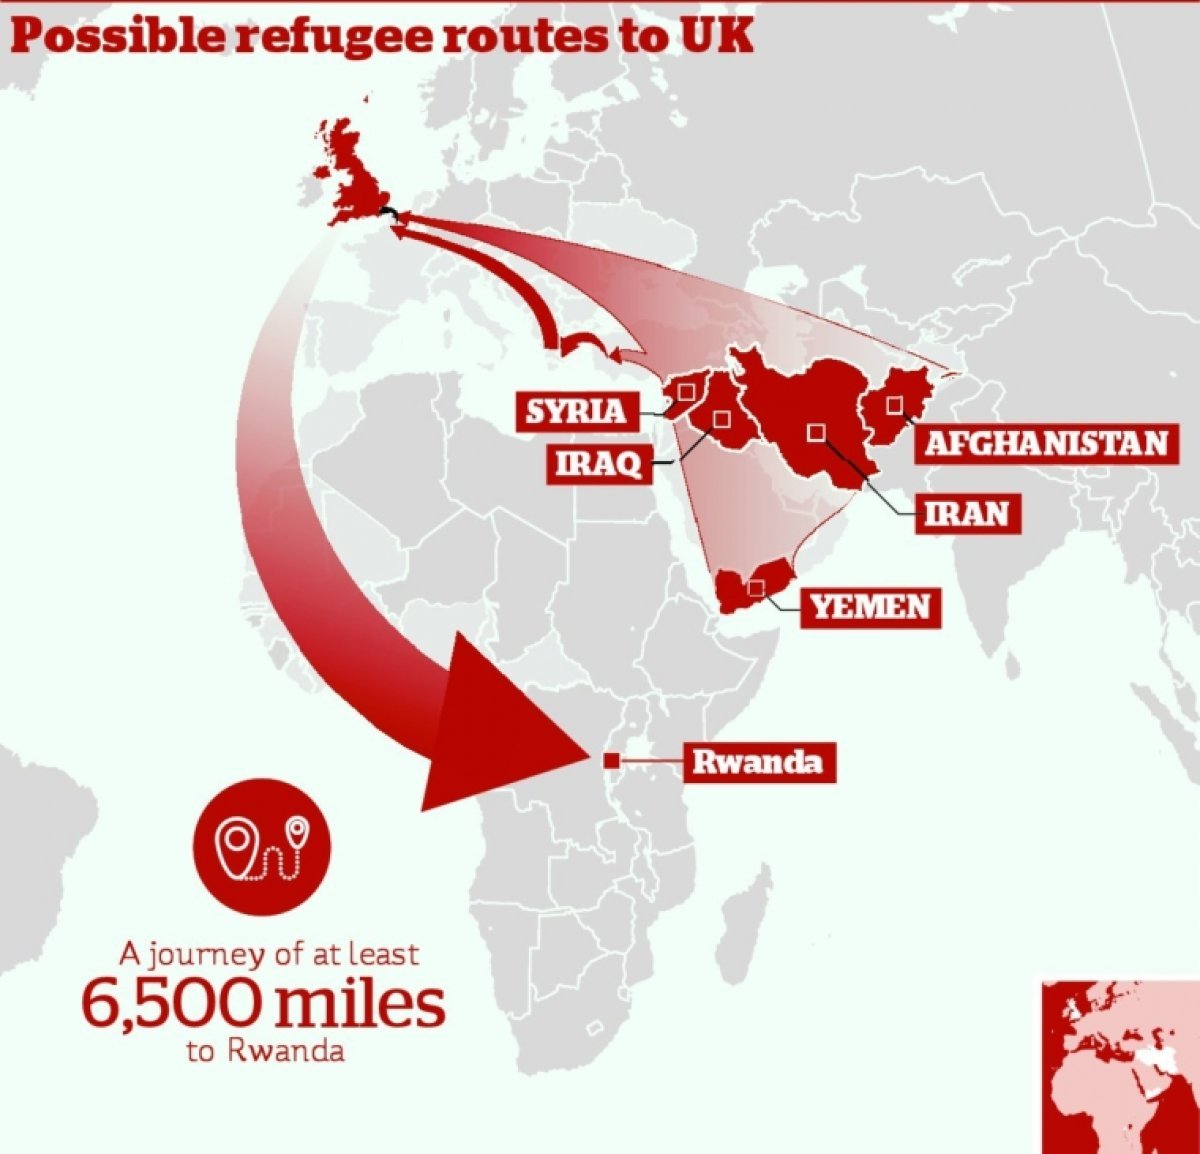 UK to send illegal immigrants to Rwanda #6